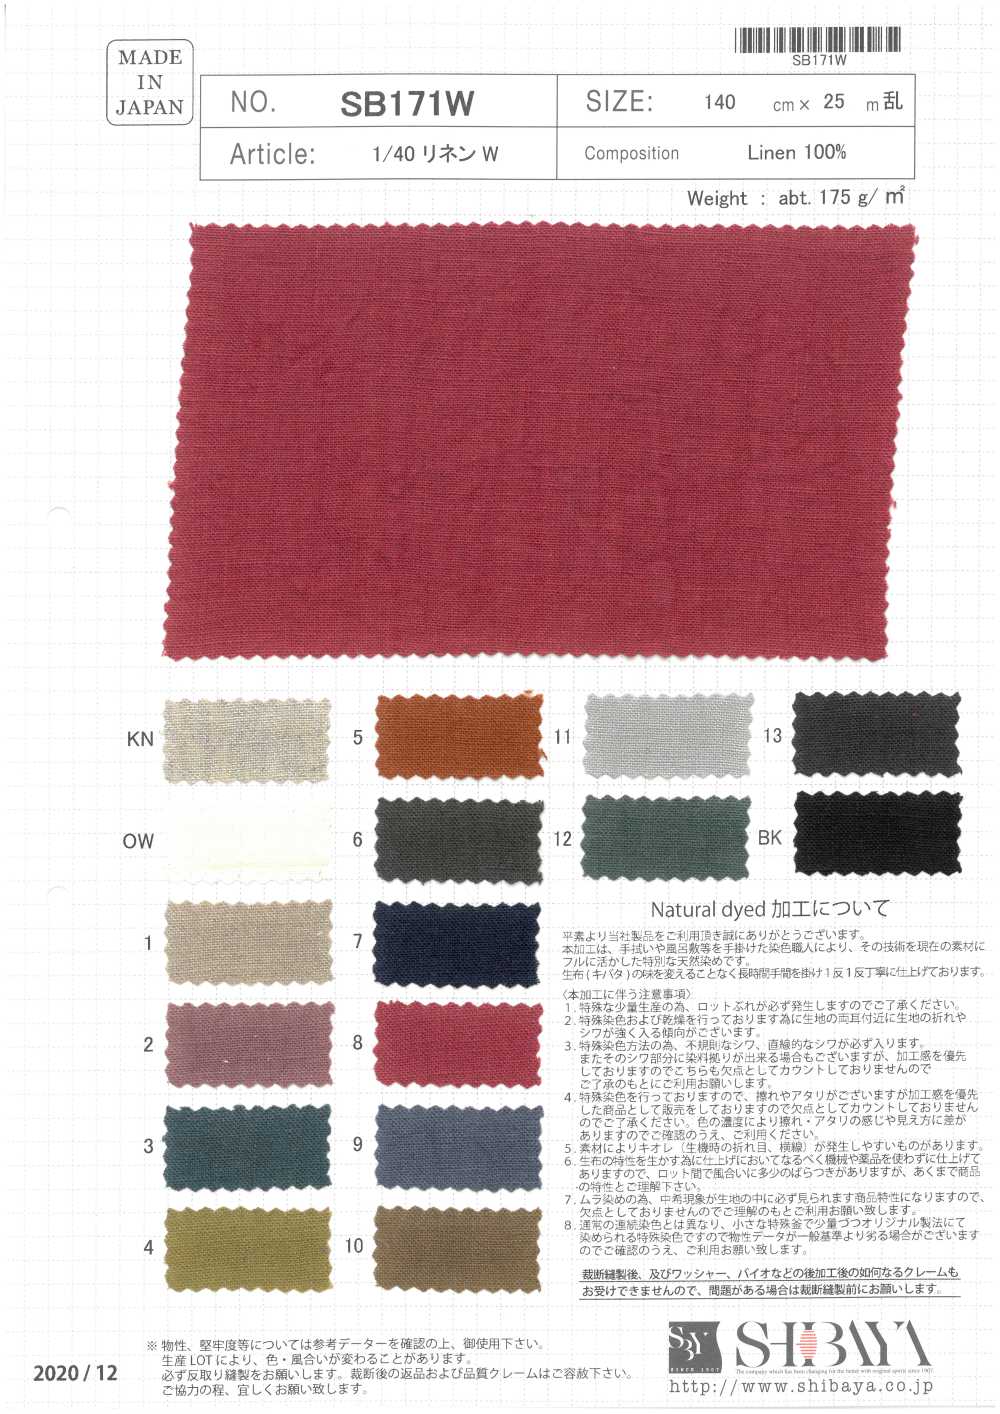 SB171W 1/40 Leinen W[Textilgewebe] SHIBAYA